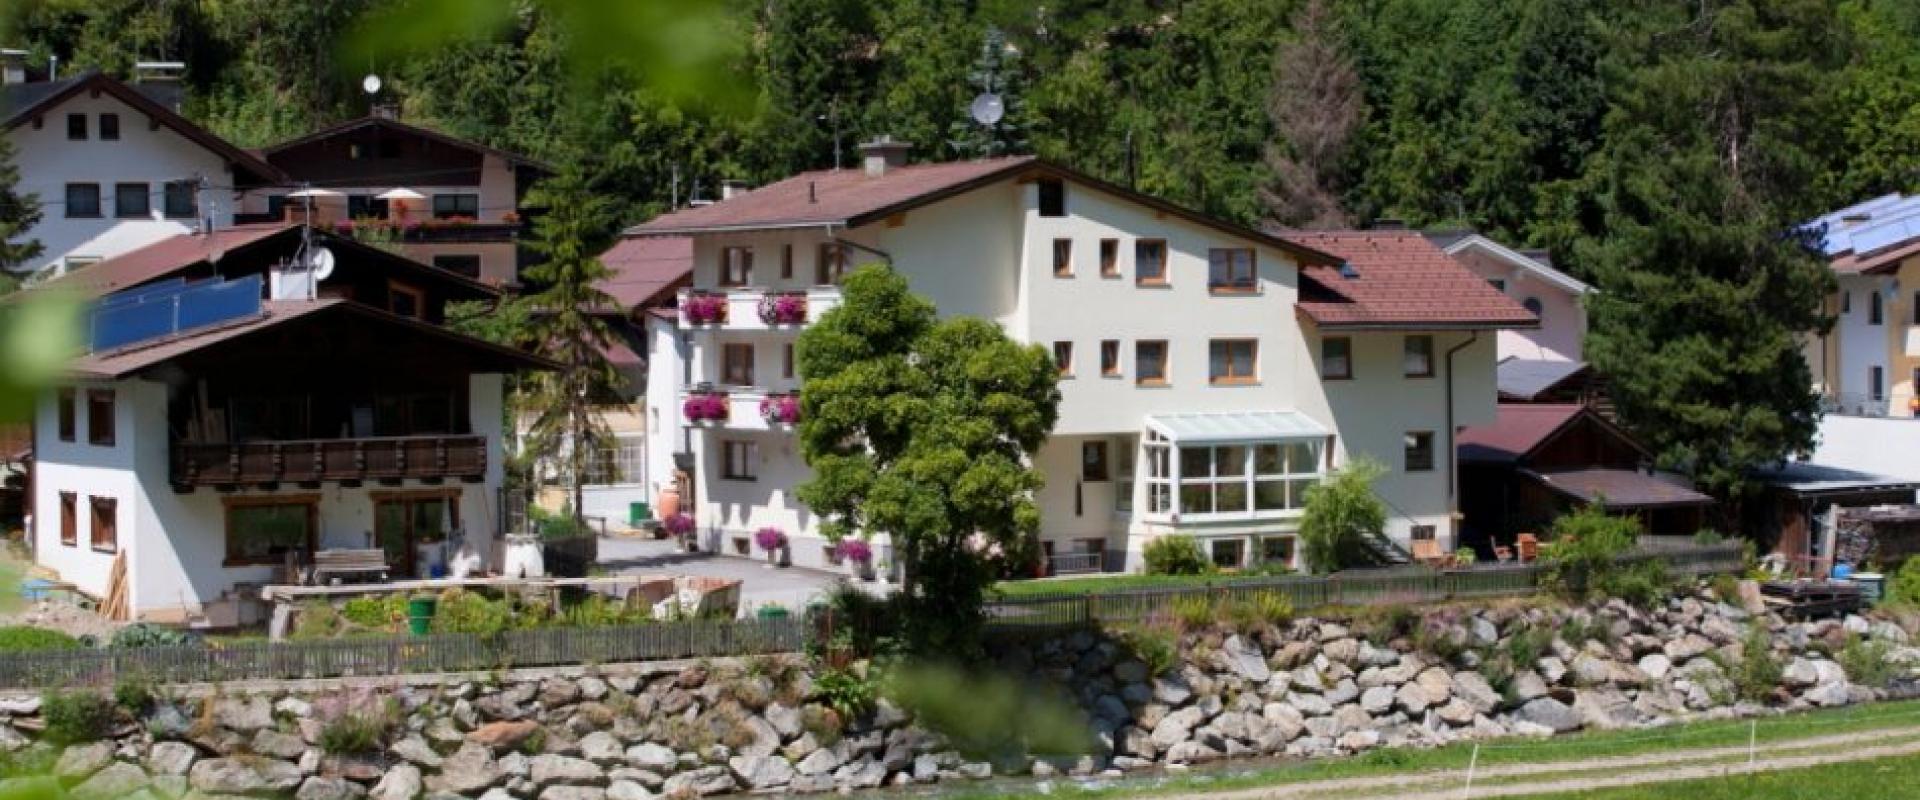 07426 Biker Hotel Garni Dias in Tirol.jpg